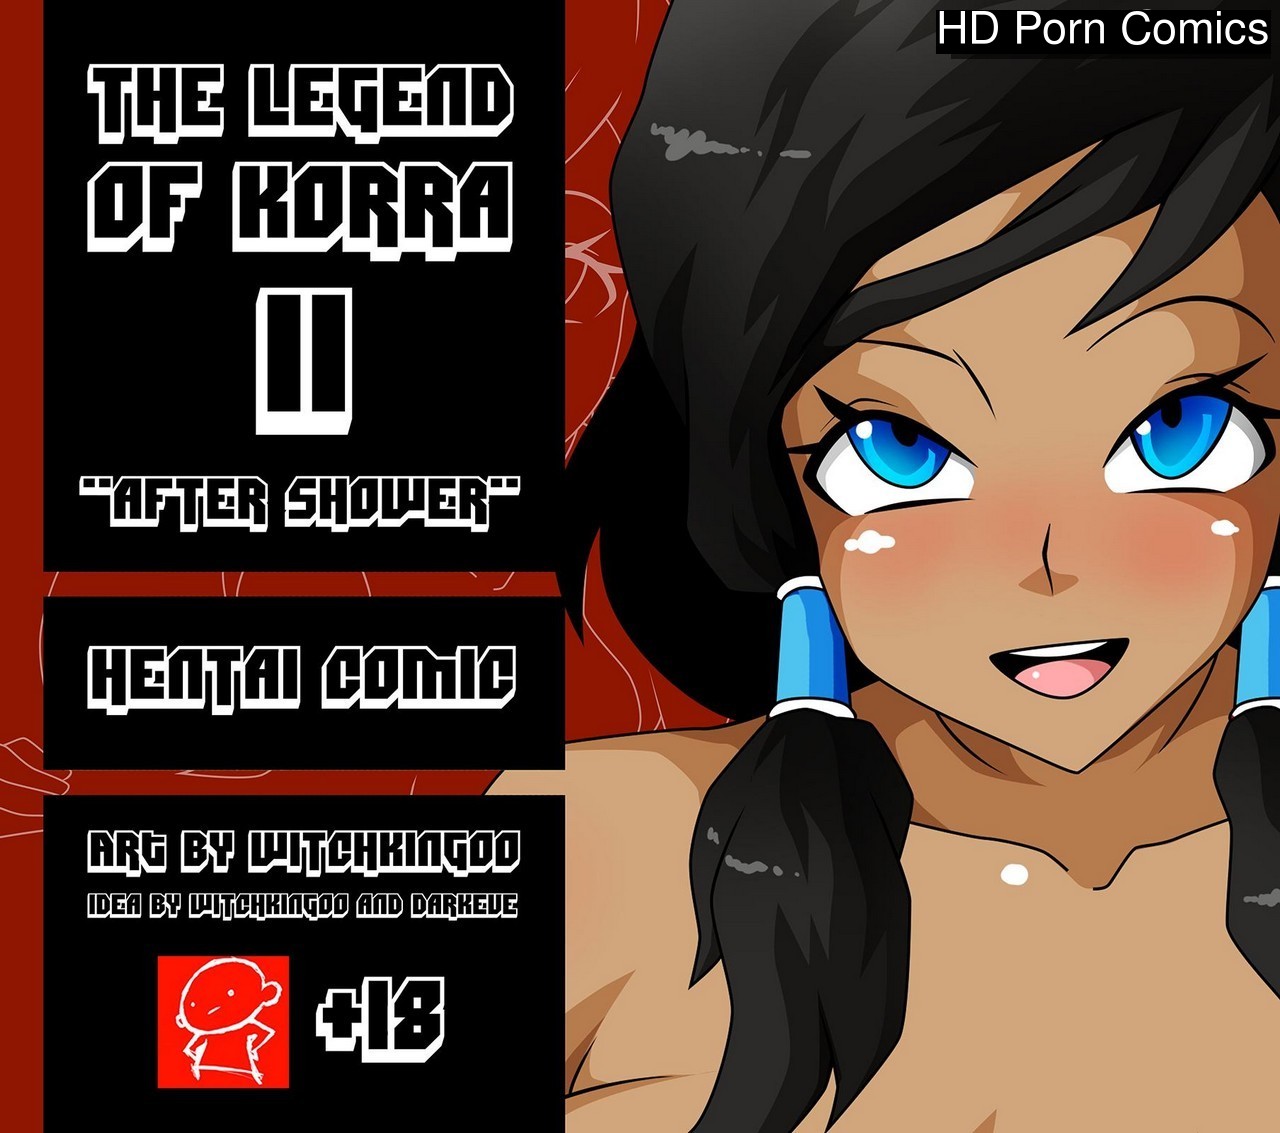 Korra Adventure Time Porn Lesbian - The Legend Of Korra 2 - After Shower Sex Comic | HD Porn Comics